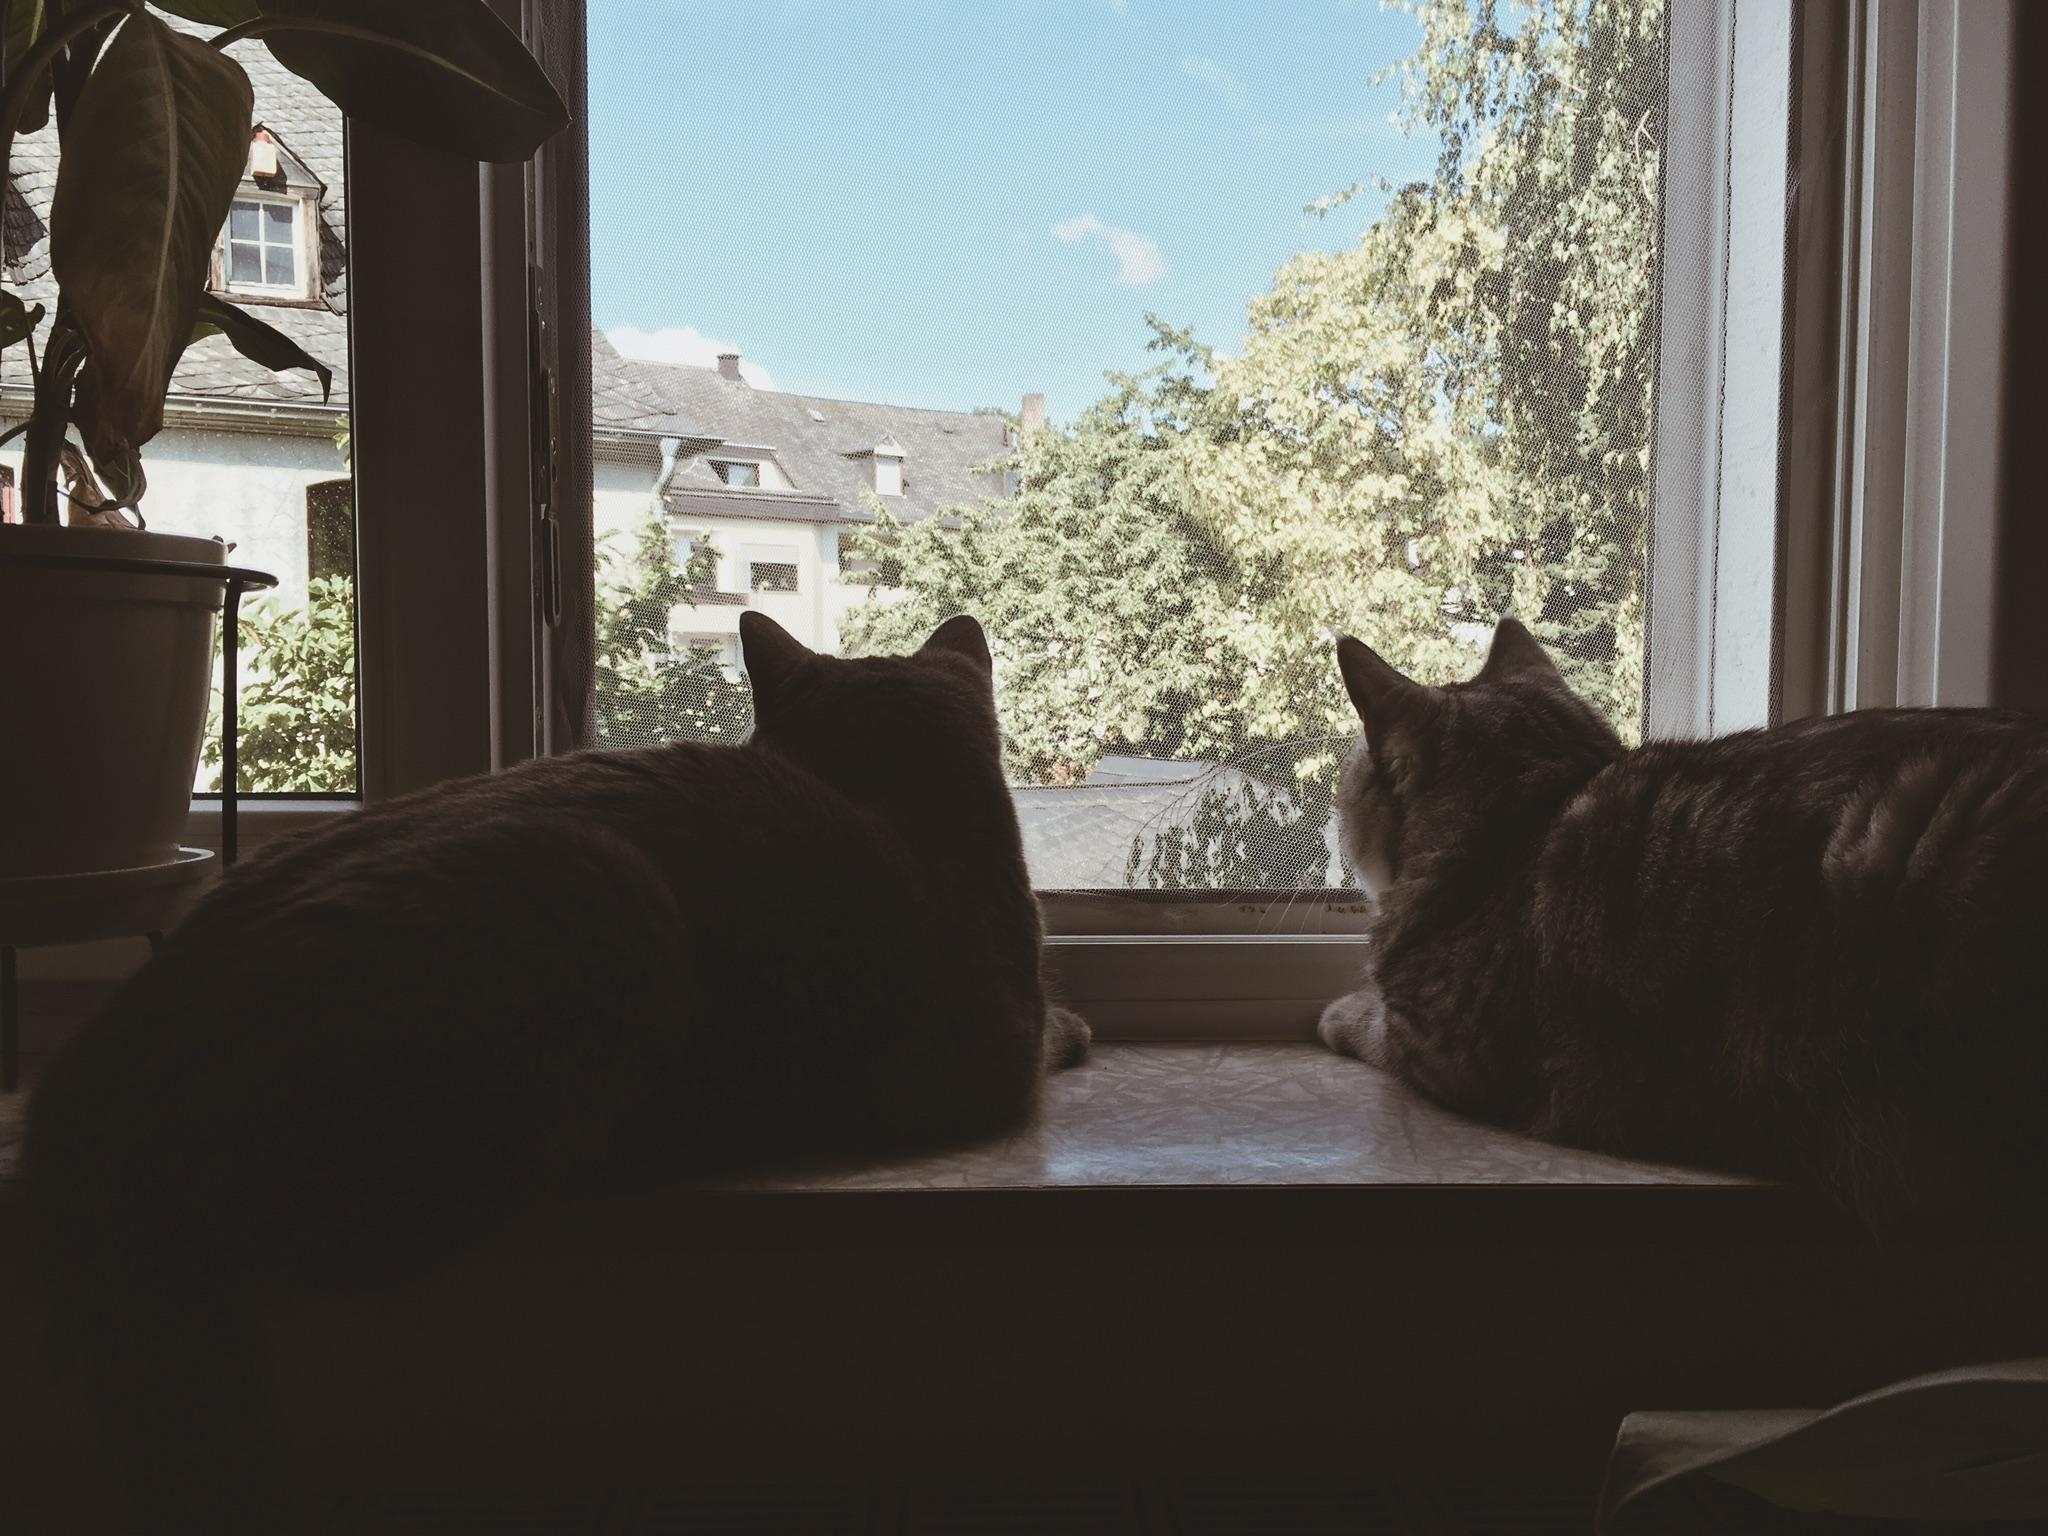 Leider kein Balkon vorhanden 😢 #livingchallenge #balkon #fenster #bedroom #cats #katzen 